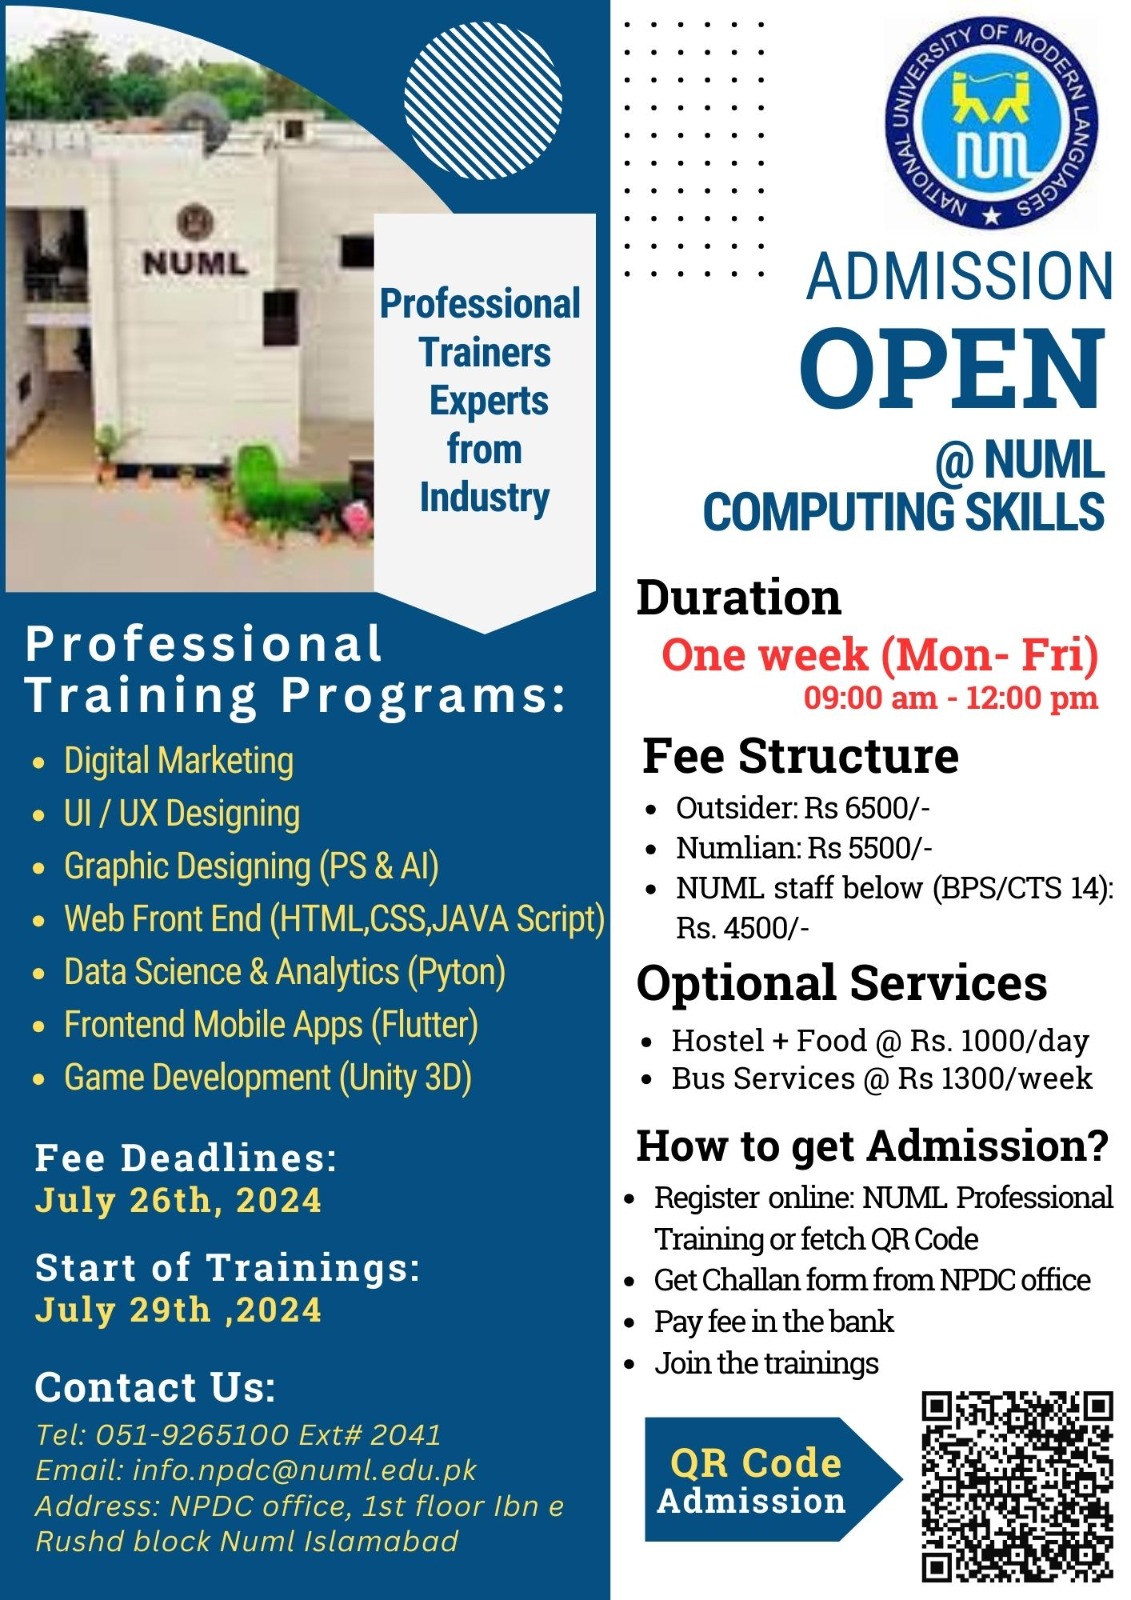 Admission Open - Computing Skills